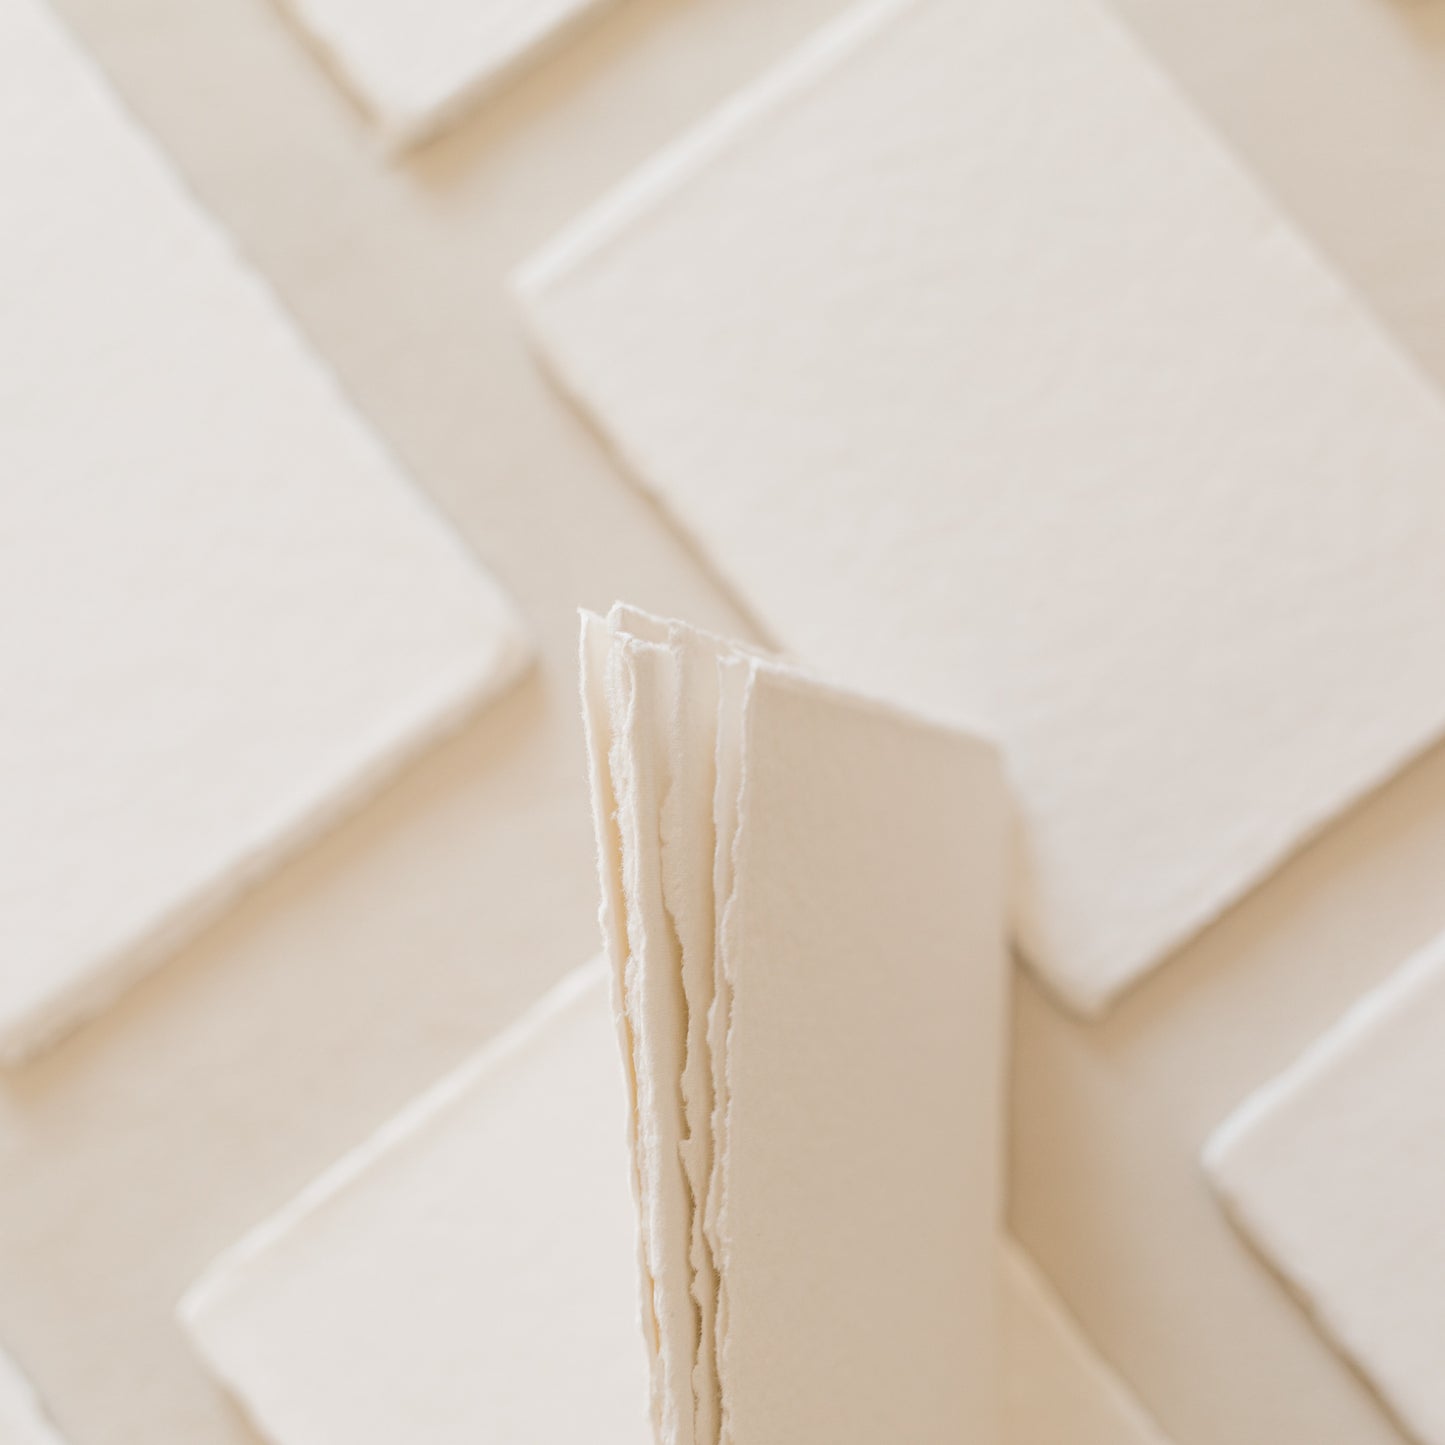 A6 – White Handmade Paper